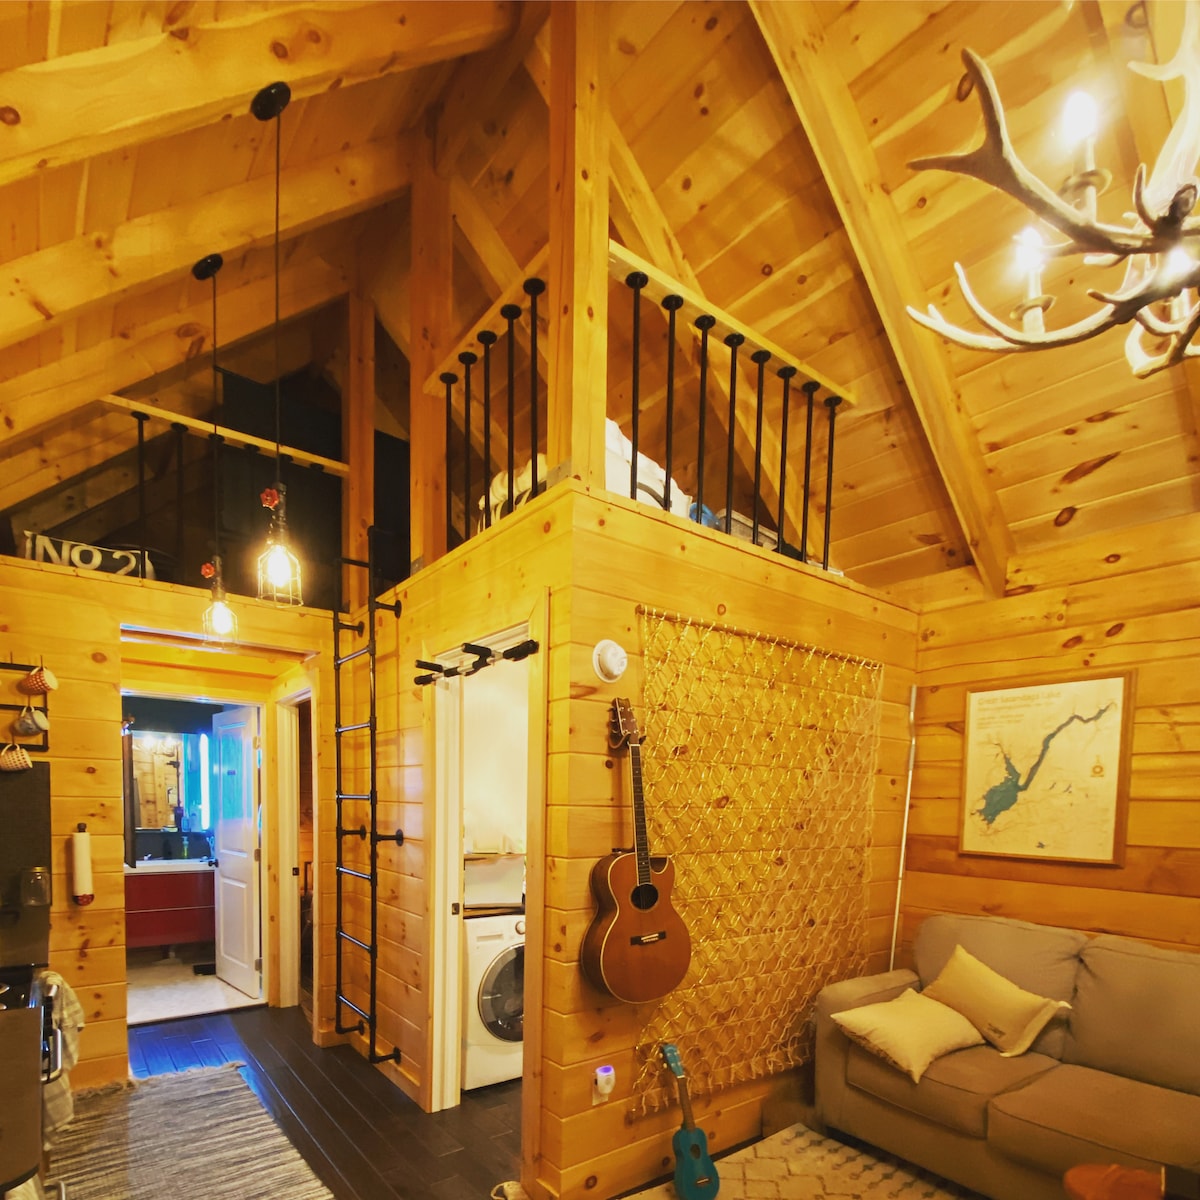 The Ultimate Cozy Cabin Getaway!